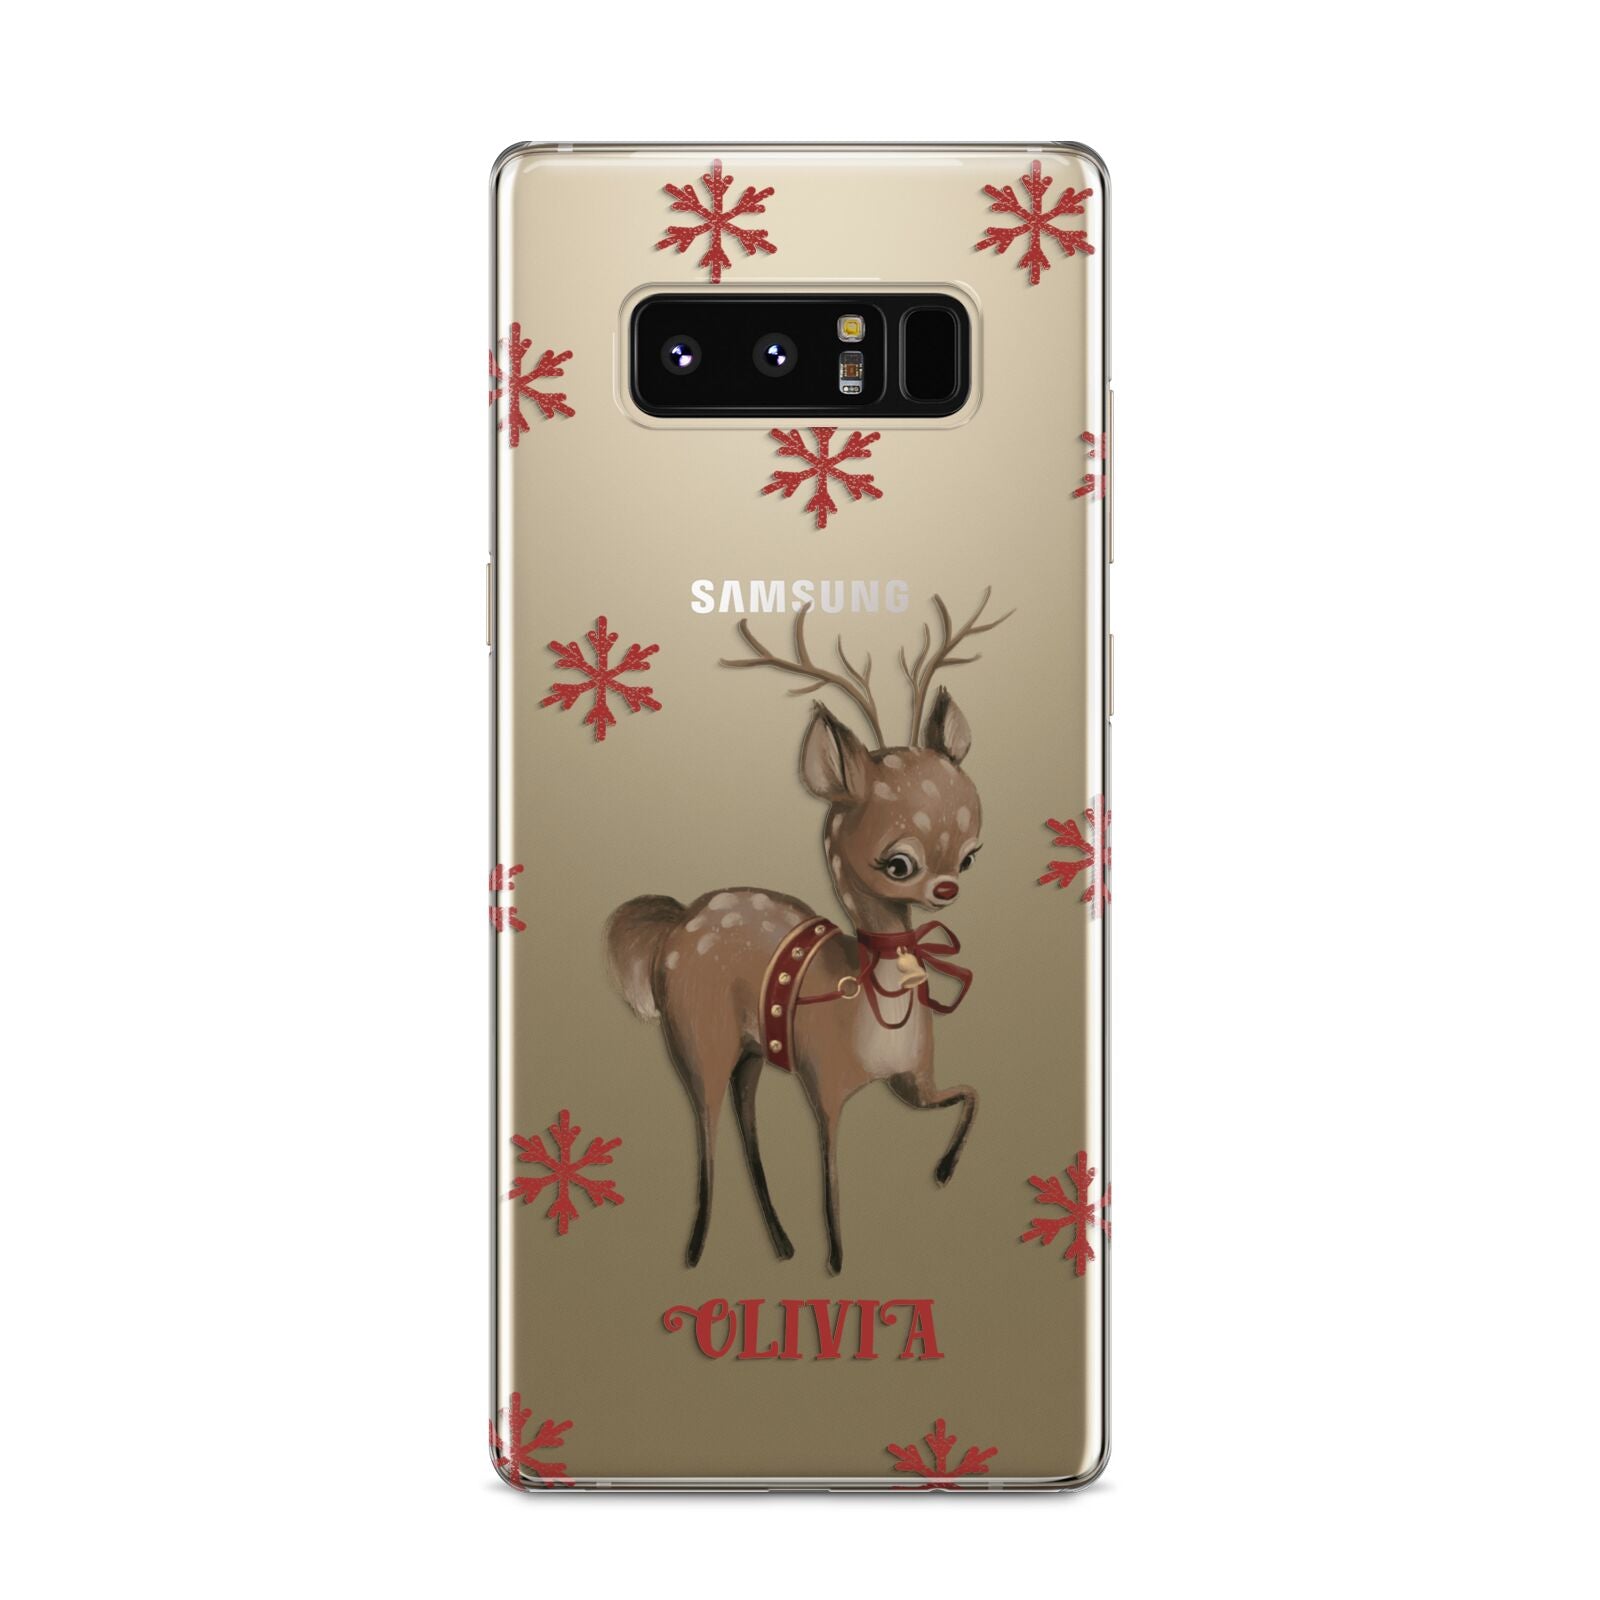 Rudolph Delivery Samsung Galaxy S8 Case